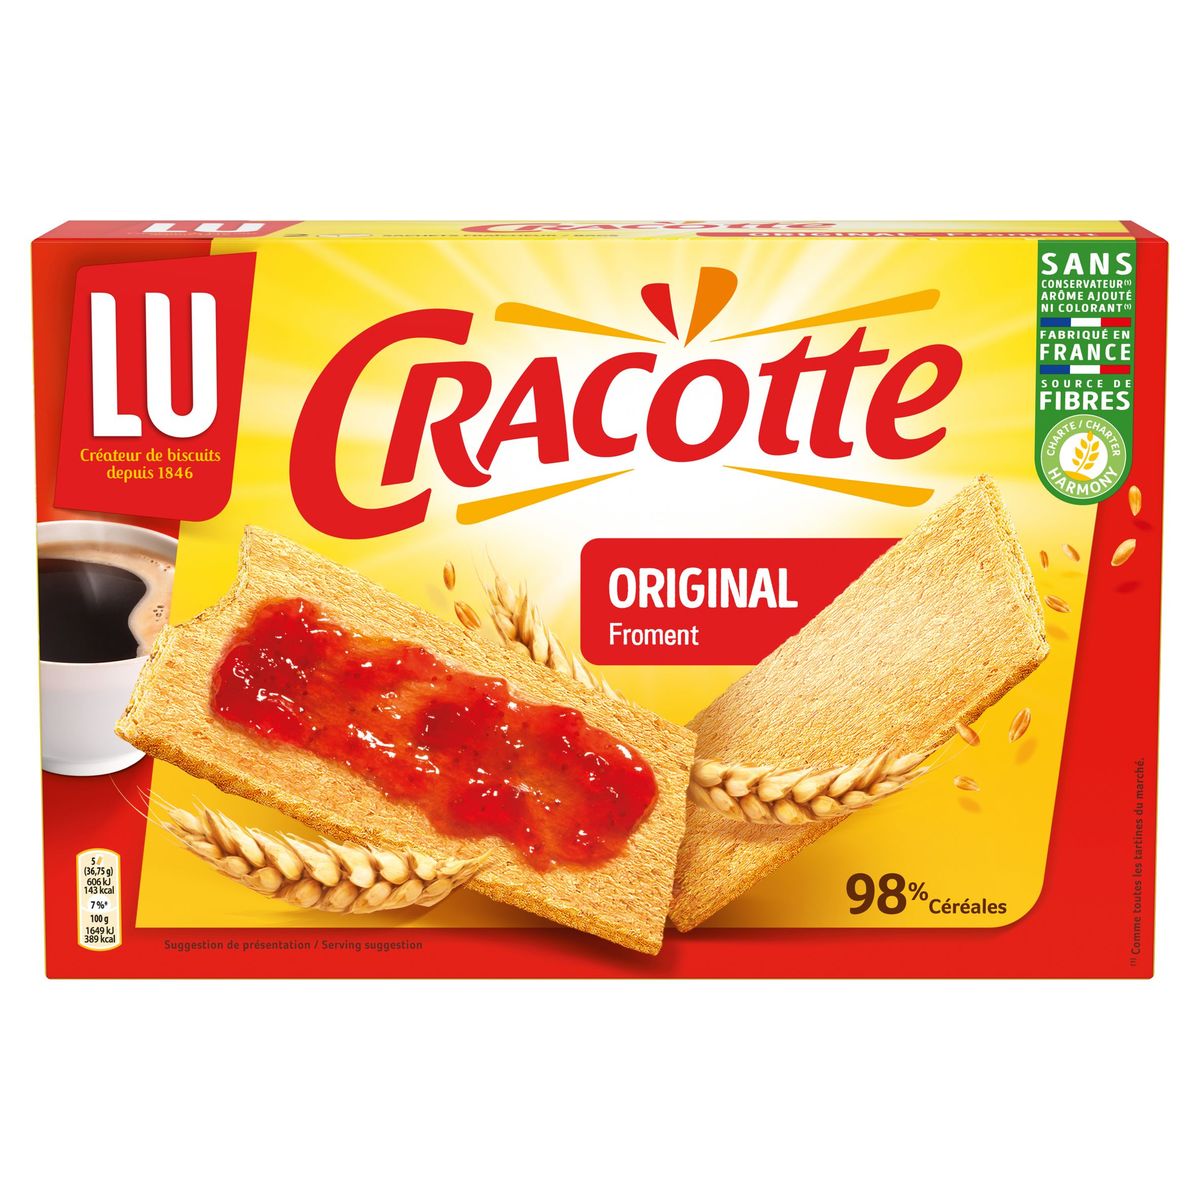 LU Cracotte Original Tarwe 250 g